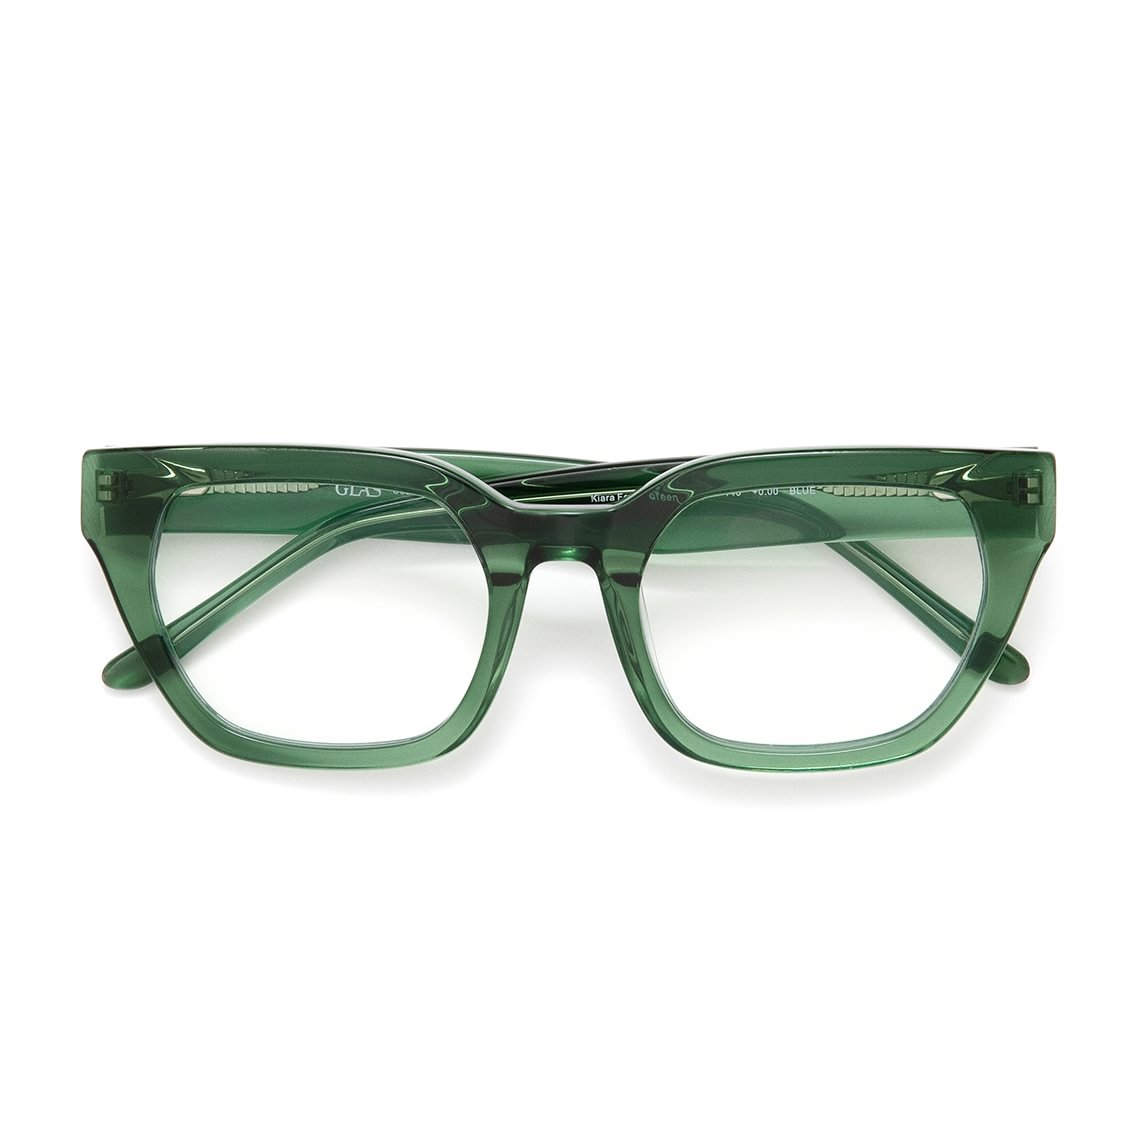 Læsebriller Kiara Forest Green - Profil Optik